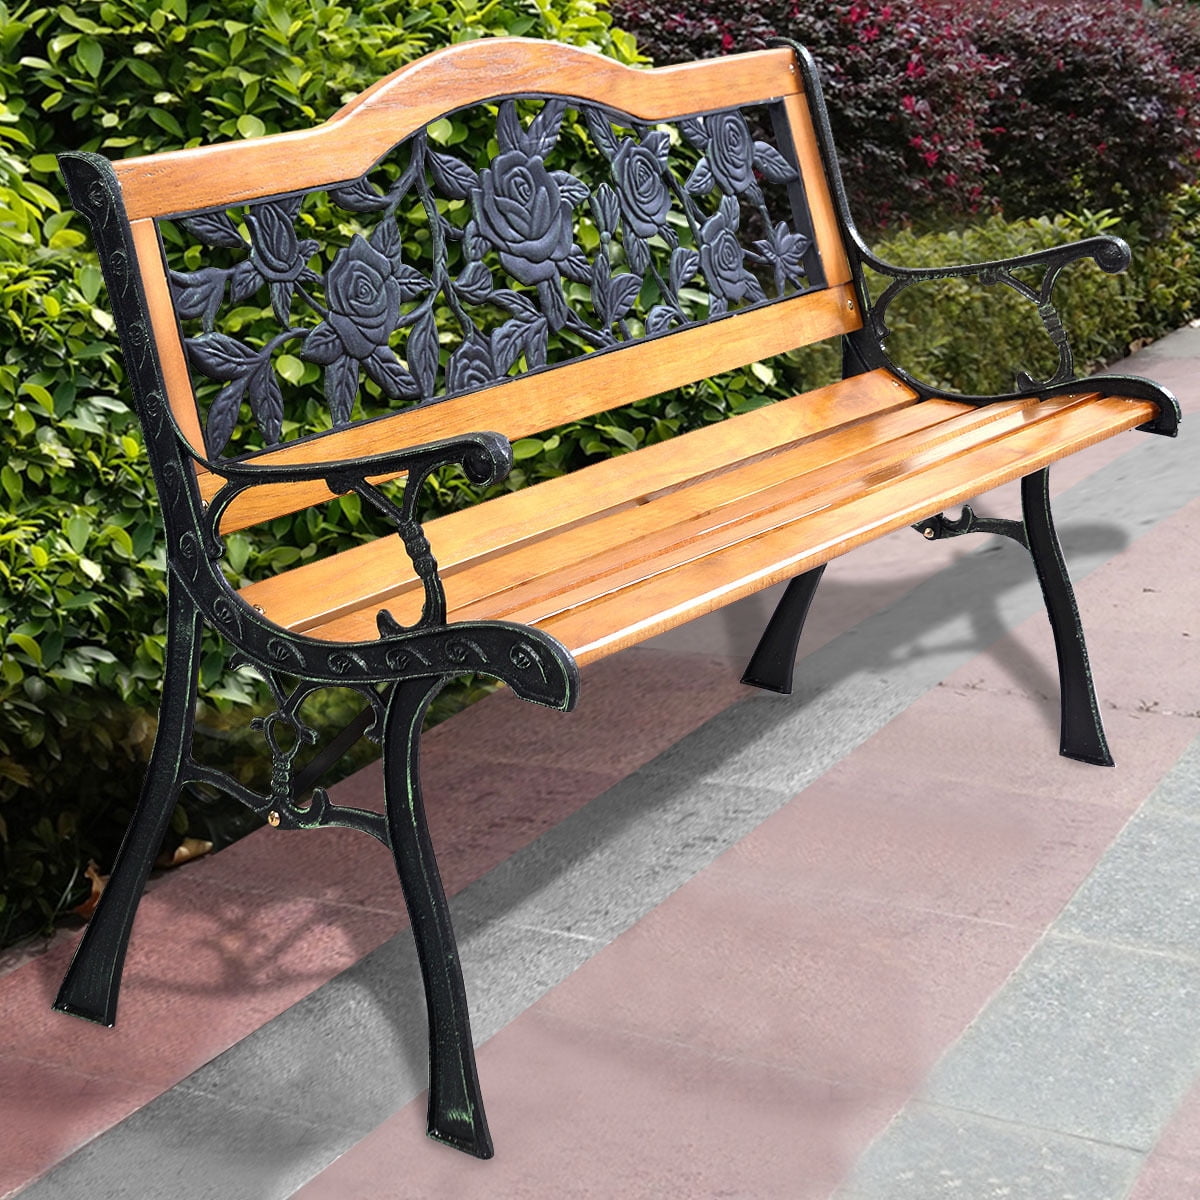 Costway Patio Park Garden Bench Porch Path Chair Furniture Cast Iron